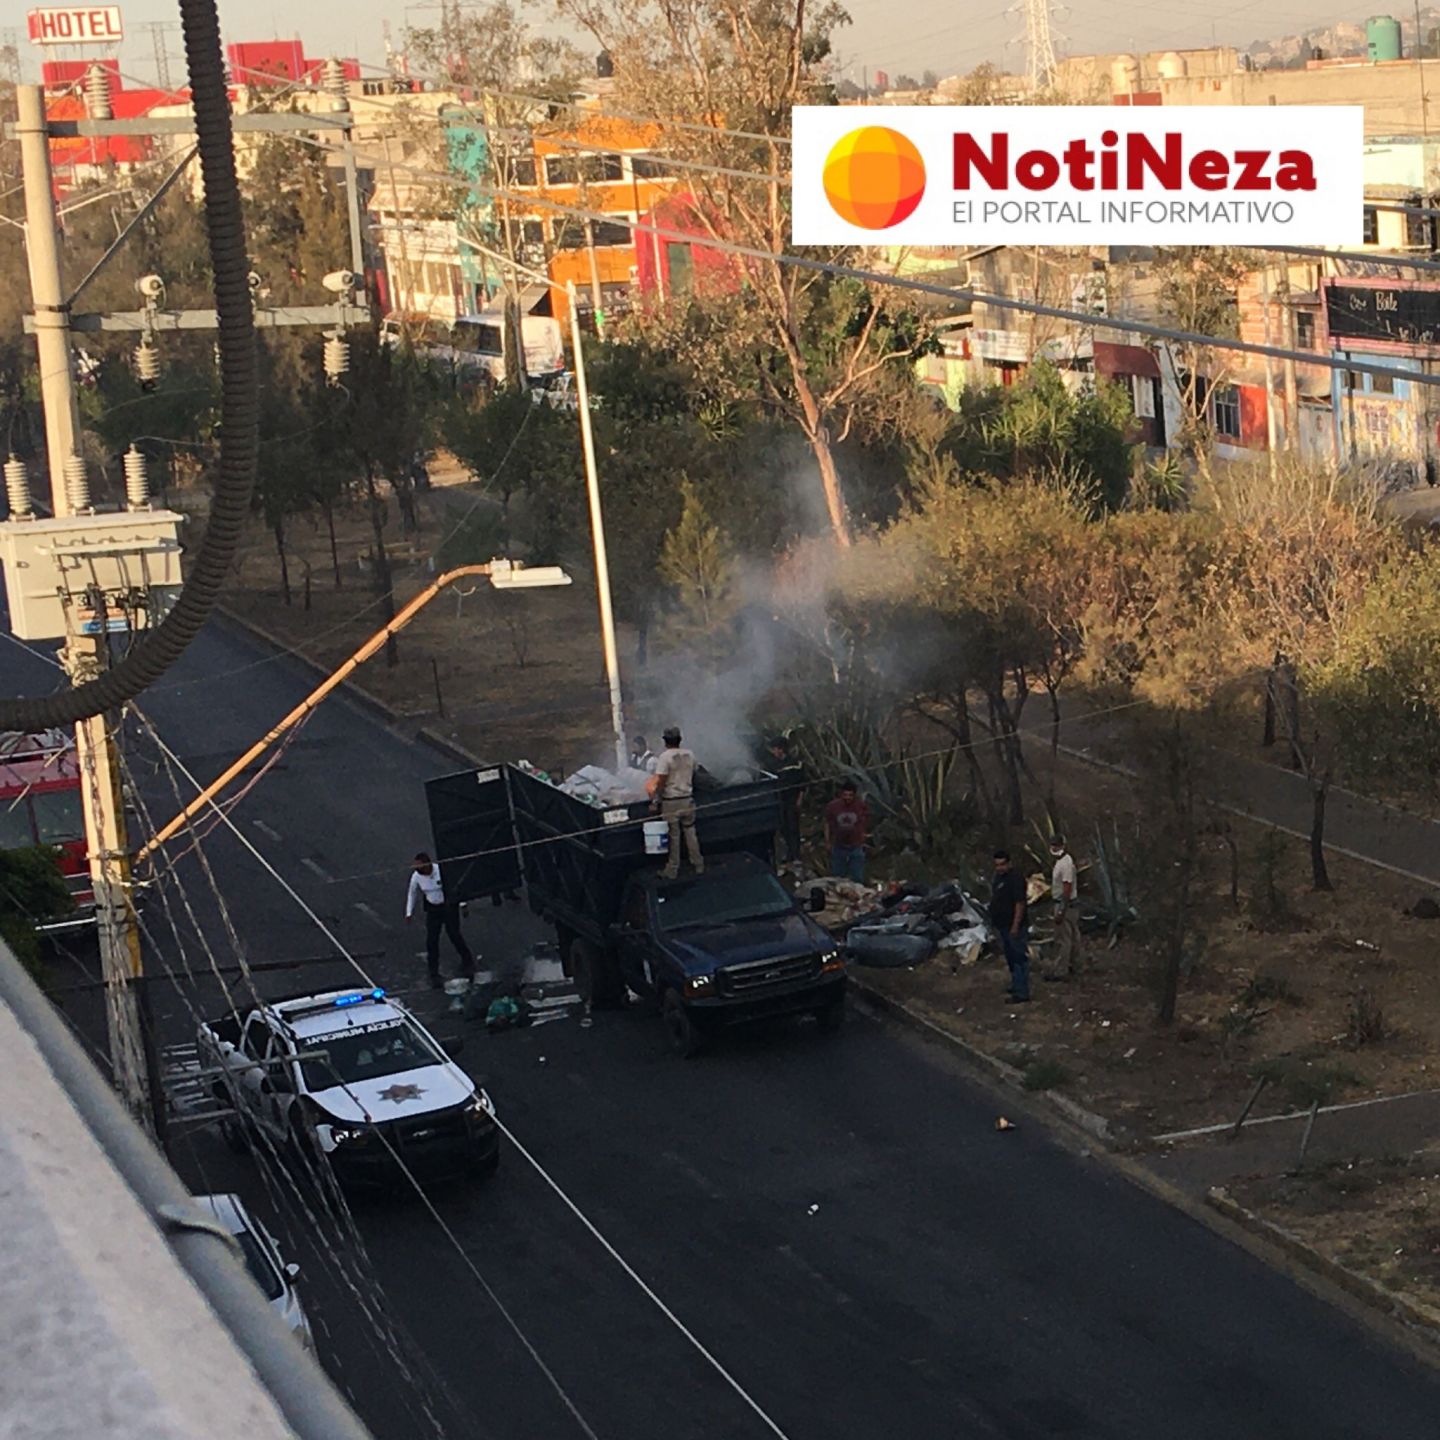 Incendia camión de fierro viejo en Carmelo Pérez cd. Nezahualcóyotl

